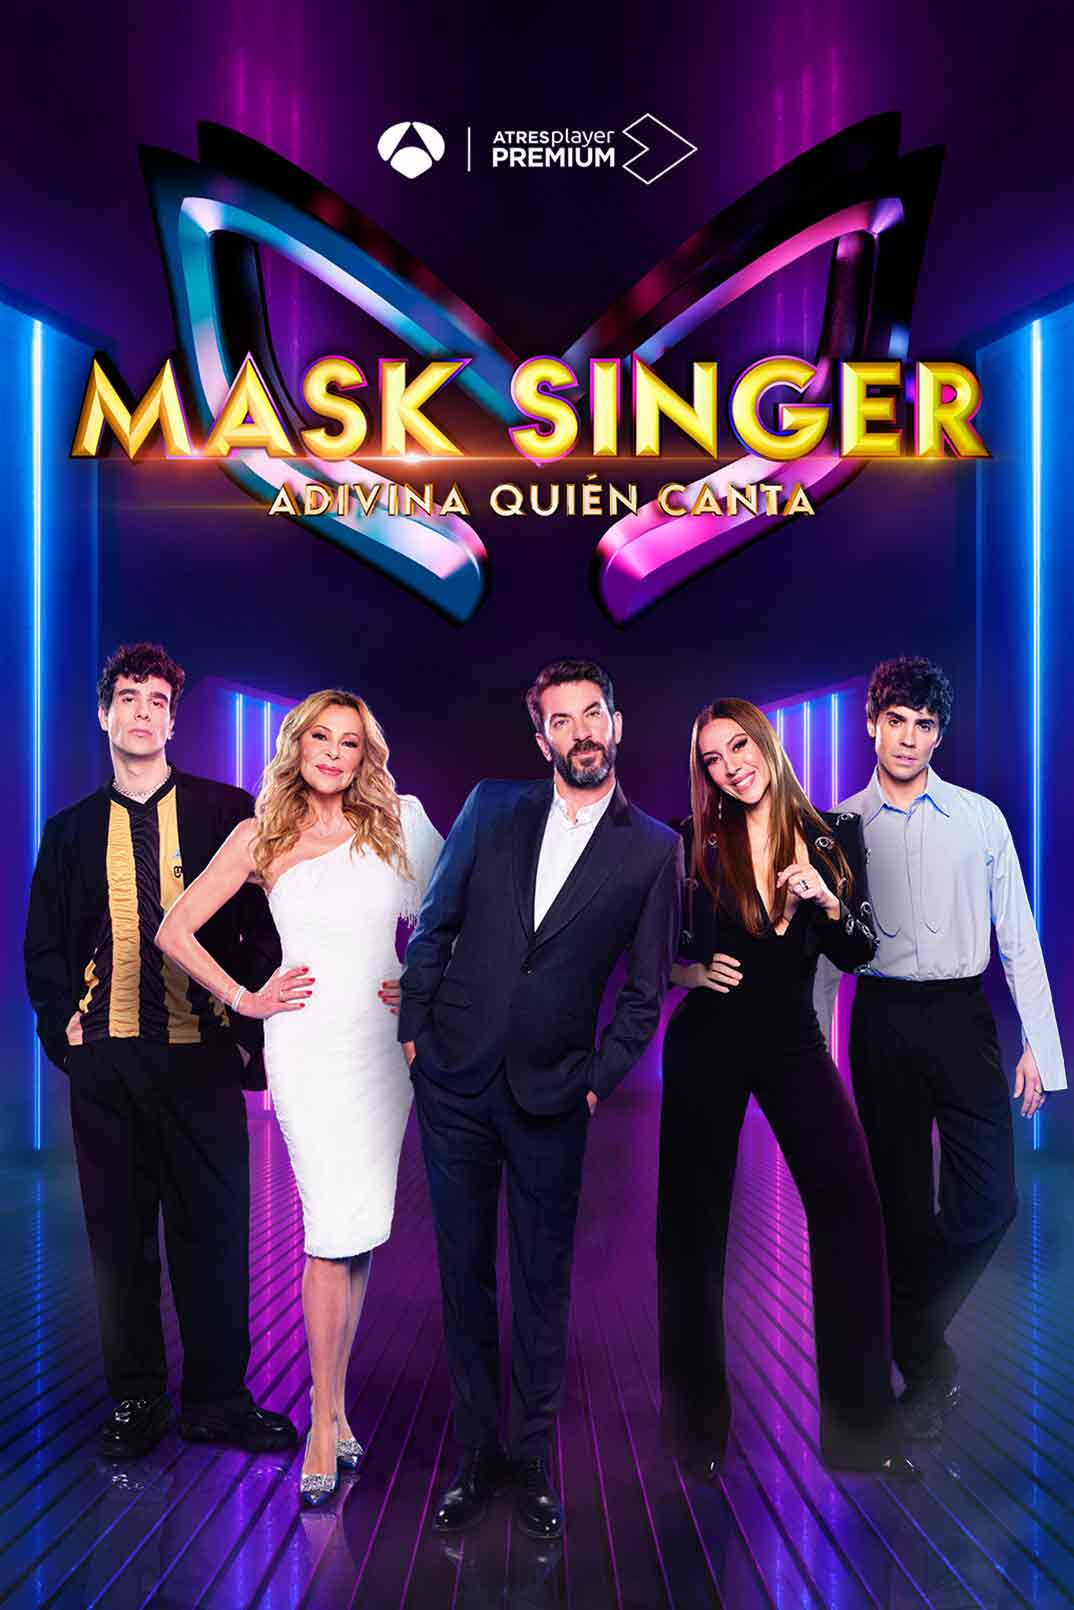 Javier Calvo, Javier Ambrosi, Mónica Naranjo, Ana Obregón y Arturo Vals - Mask Singer: Adivina quién canta © Antena 3